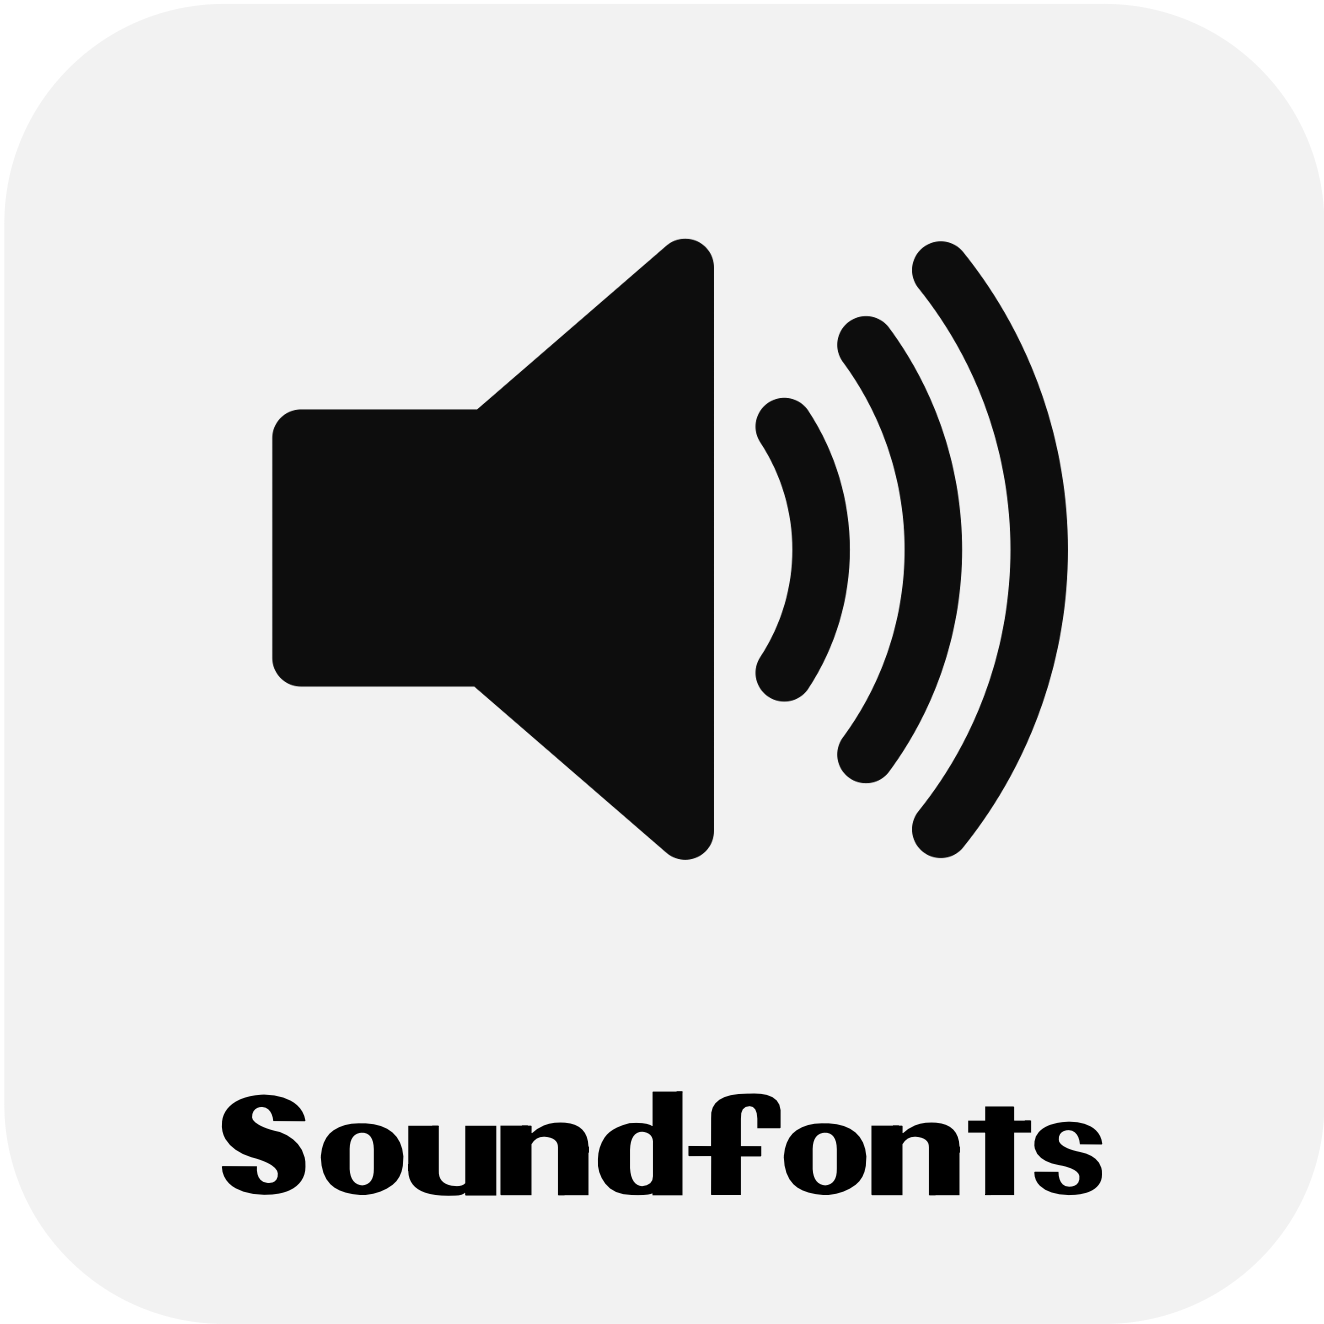 Soundfonts